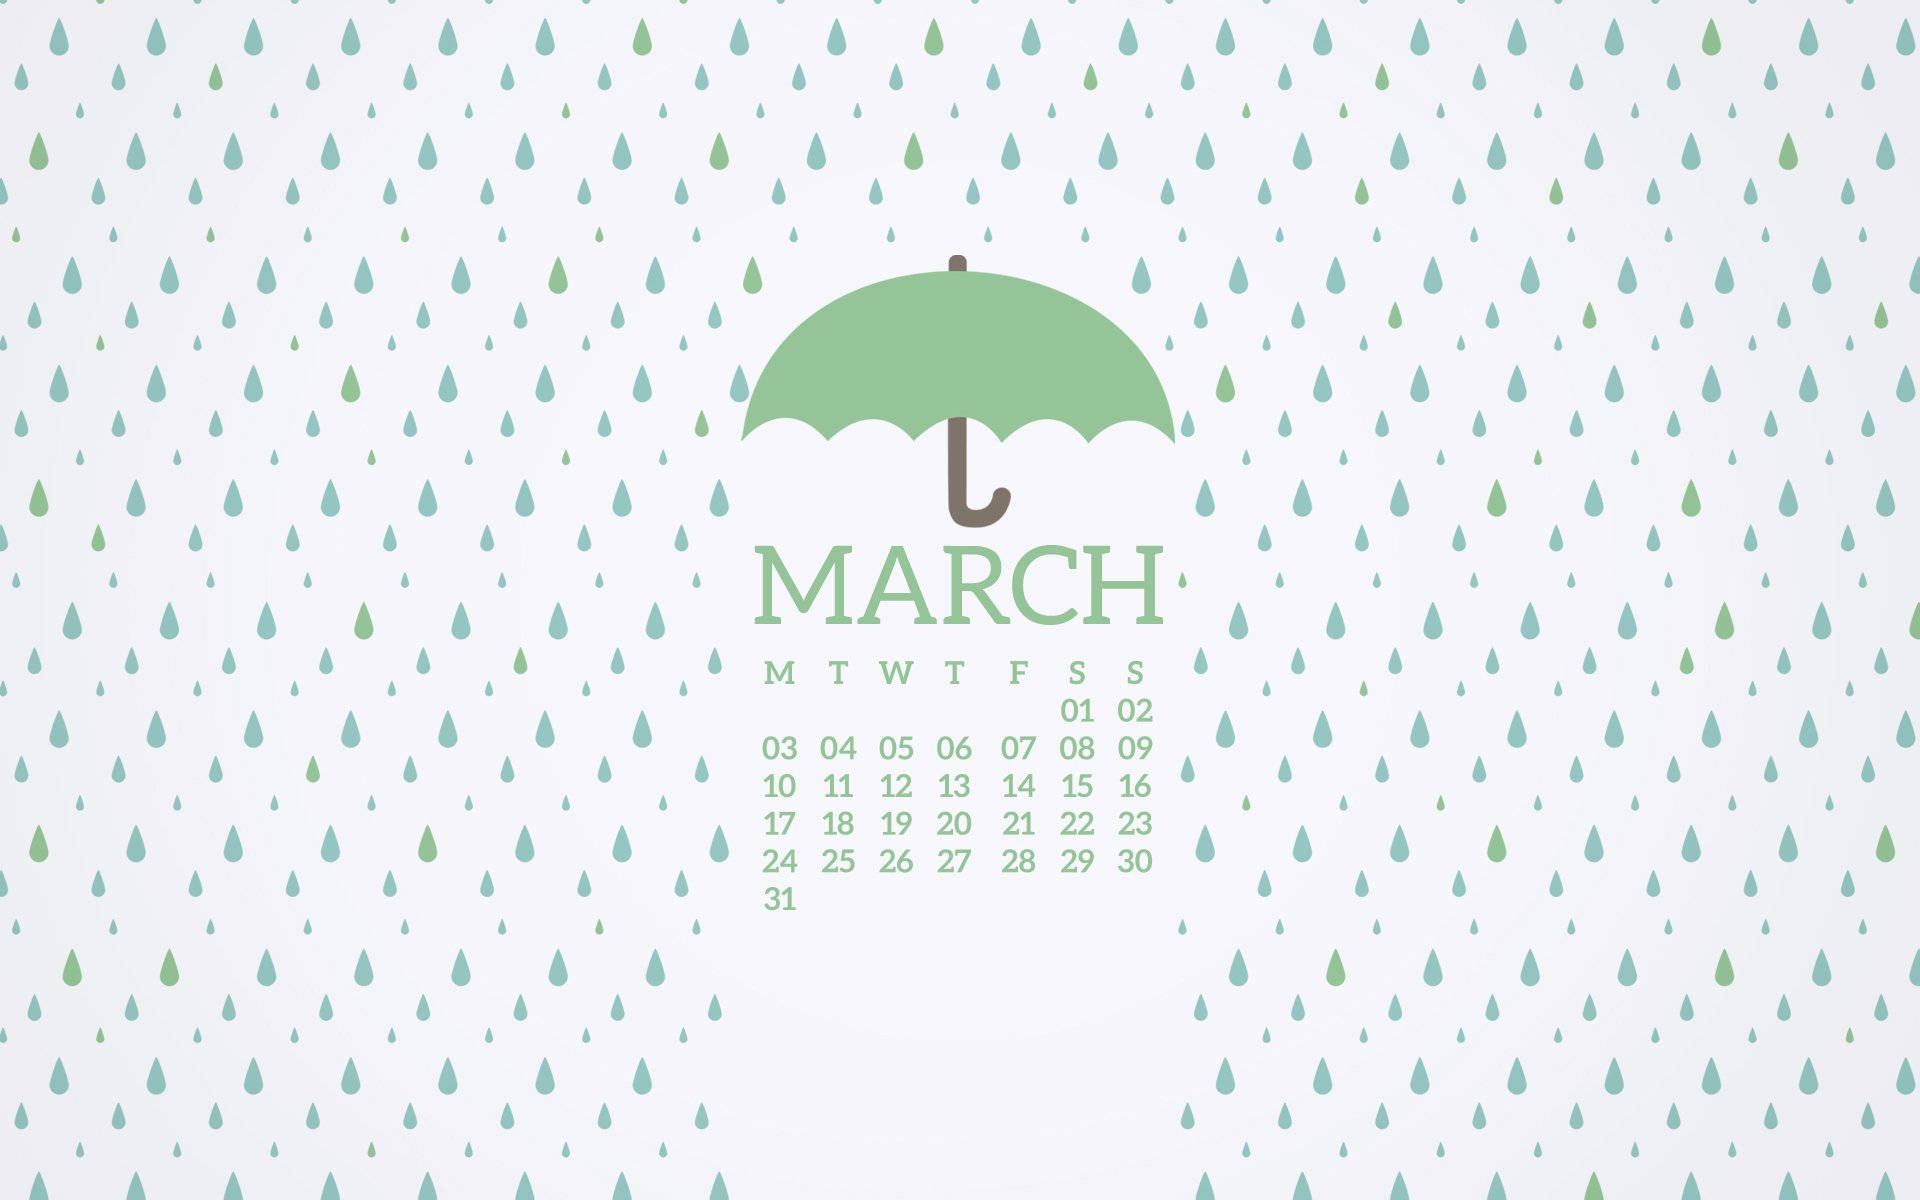 March Calendar With Umbrella Wallpaper